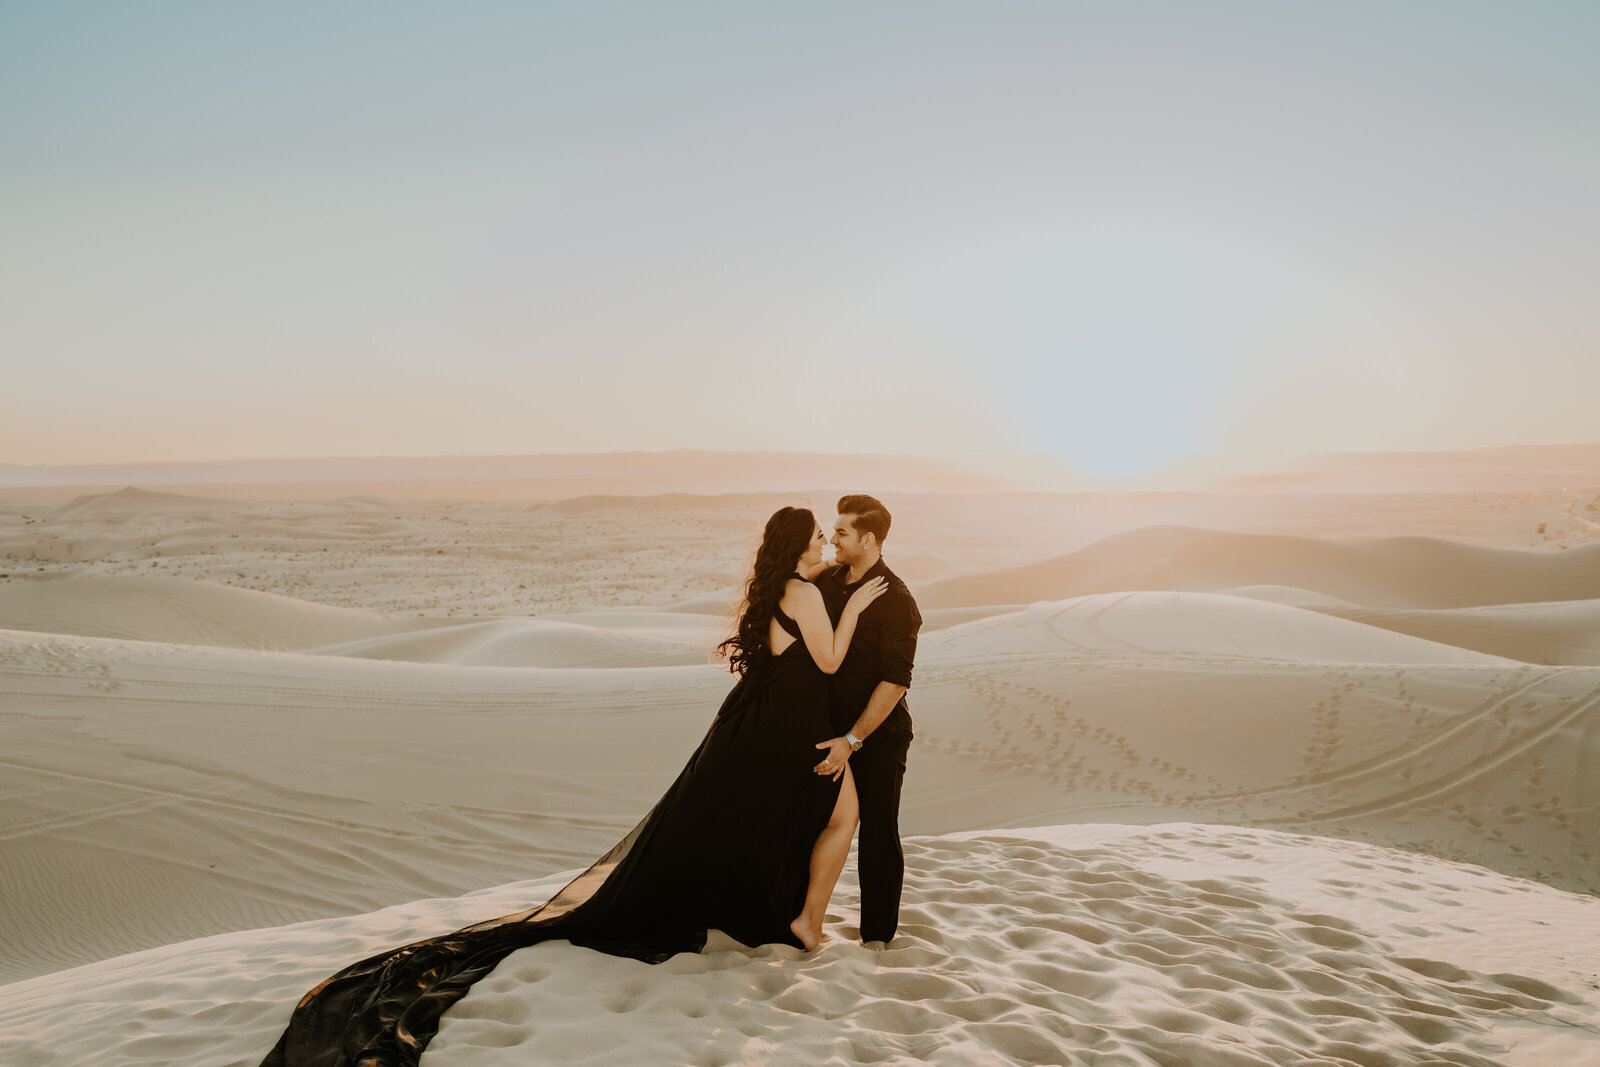 Temecula, California Wedding photographer Yescphotography dreamy desert photo